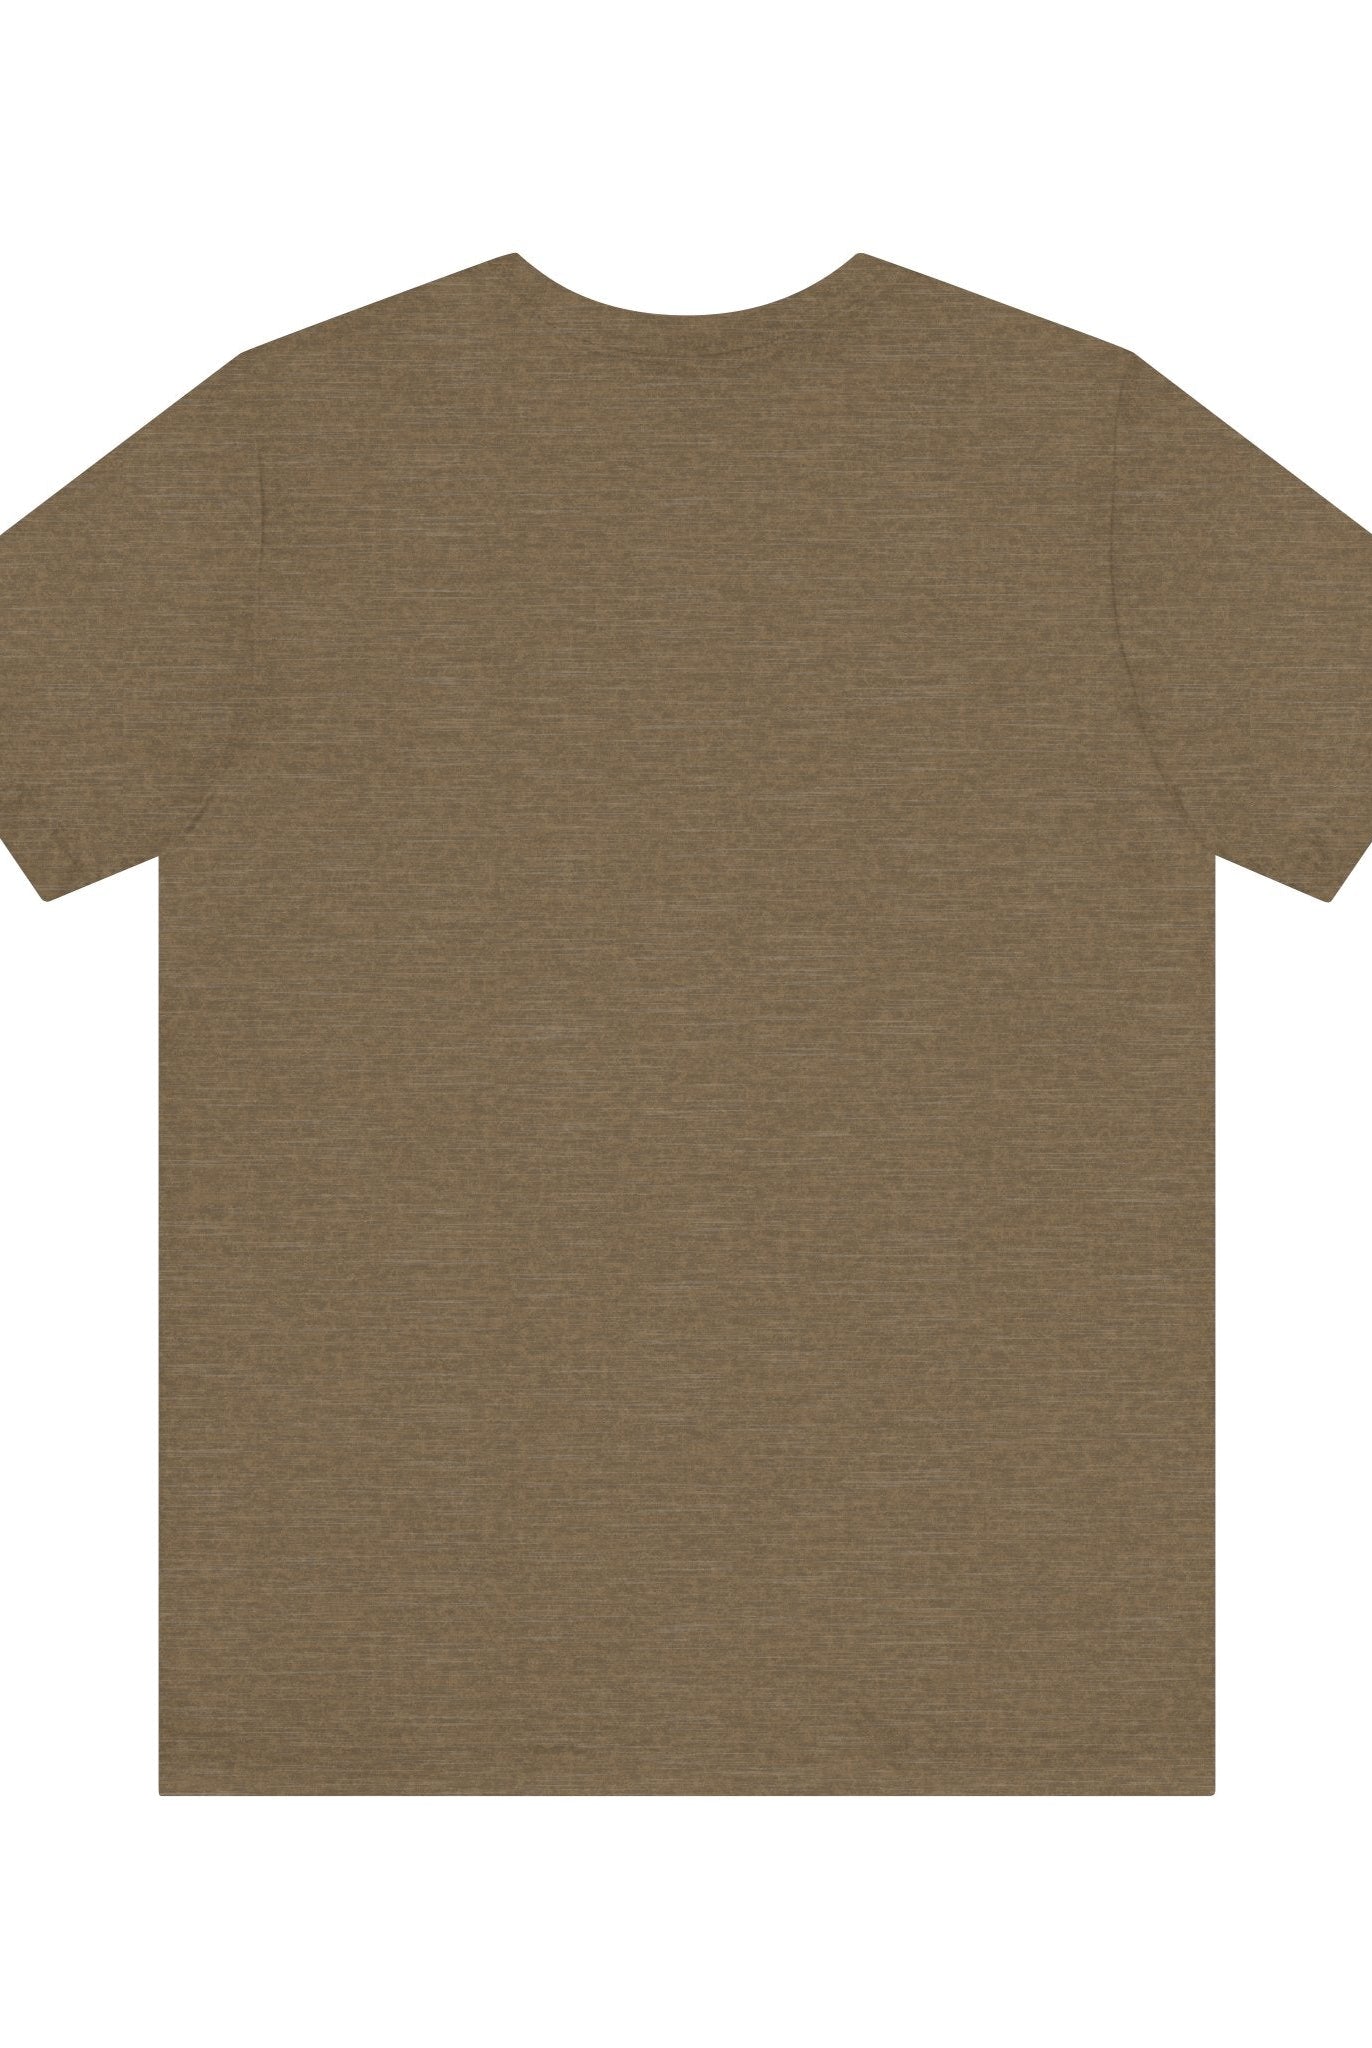 Brown logo-printed unisex t-shirt by Bella & Canvas - Be Amazing - Soulshinecreators